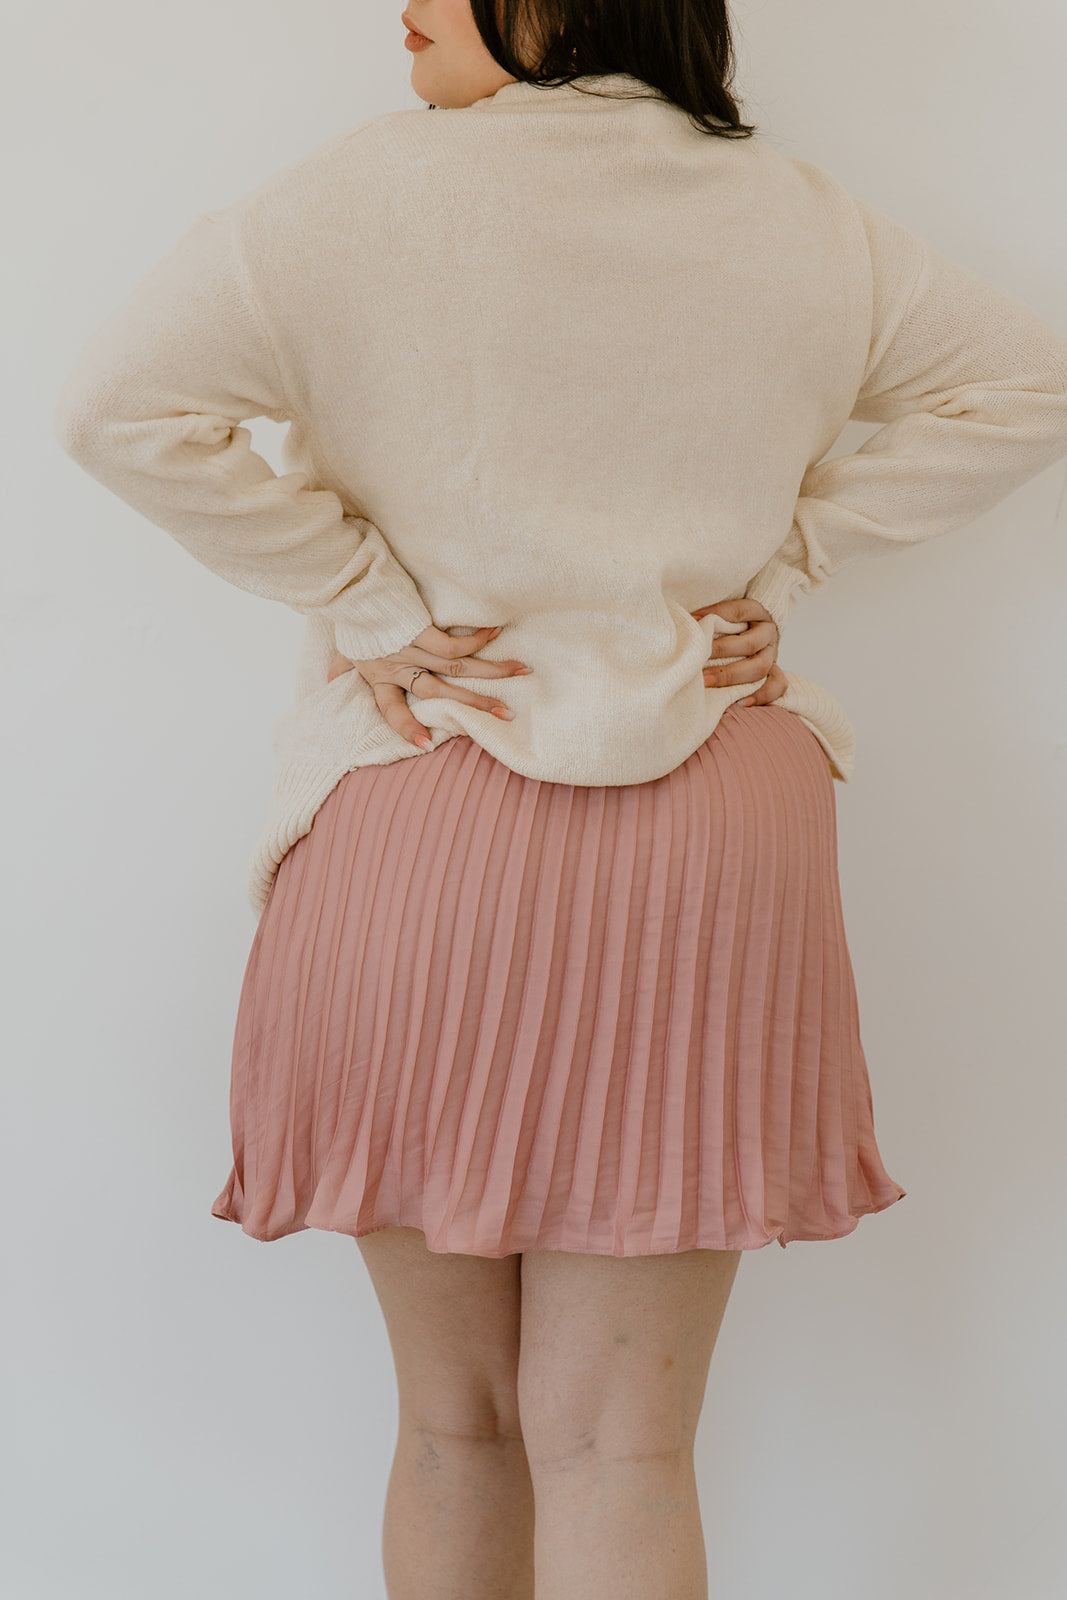 Satin Pleated Skirt